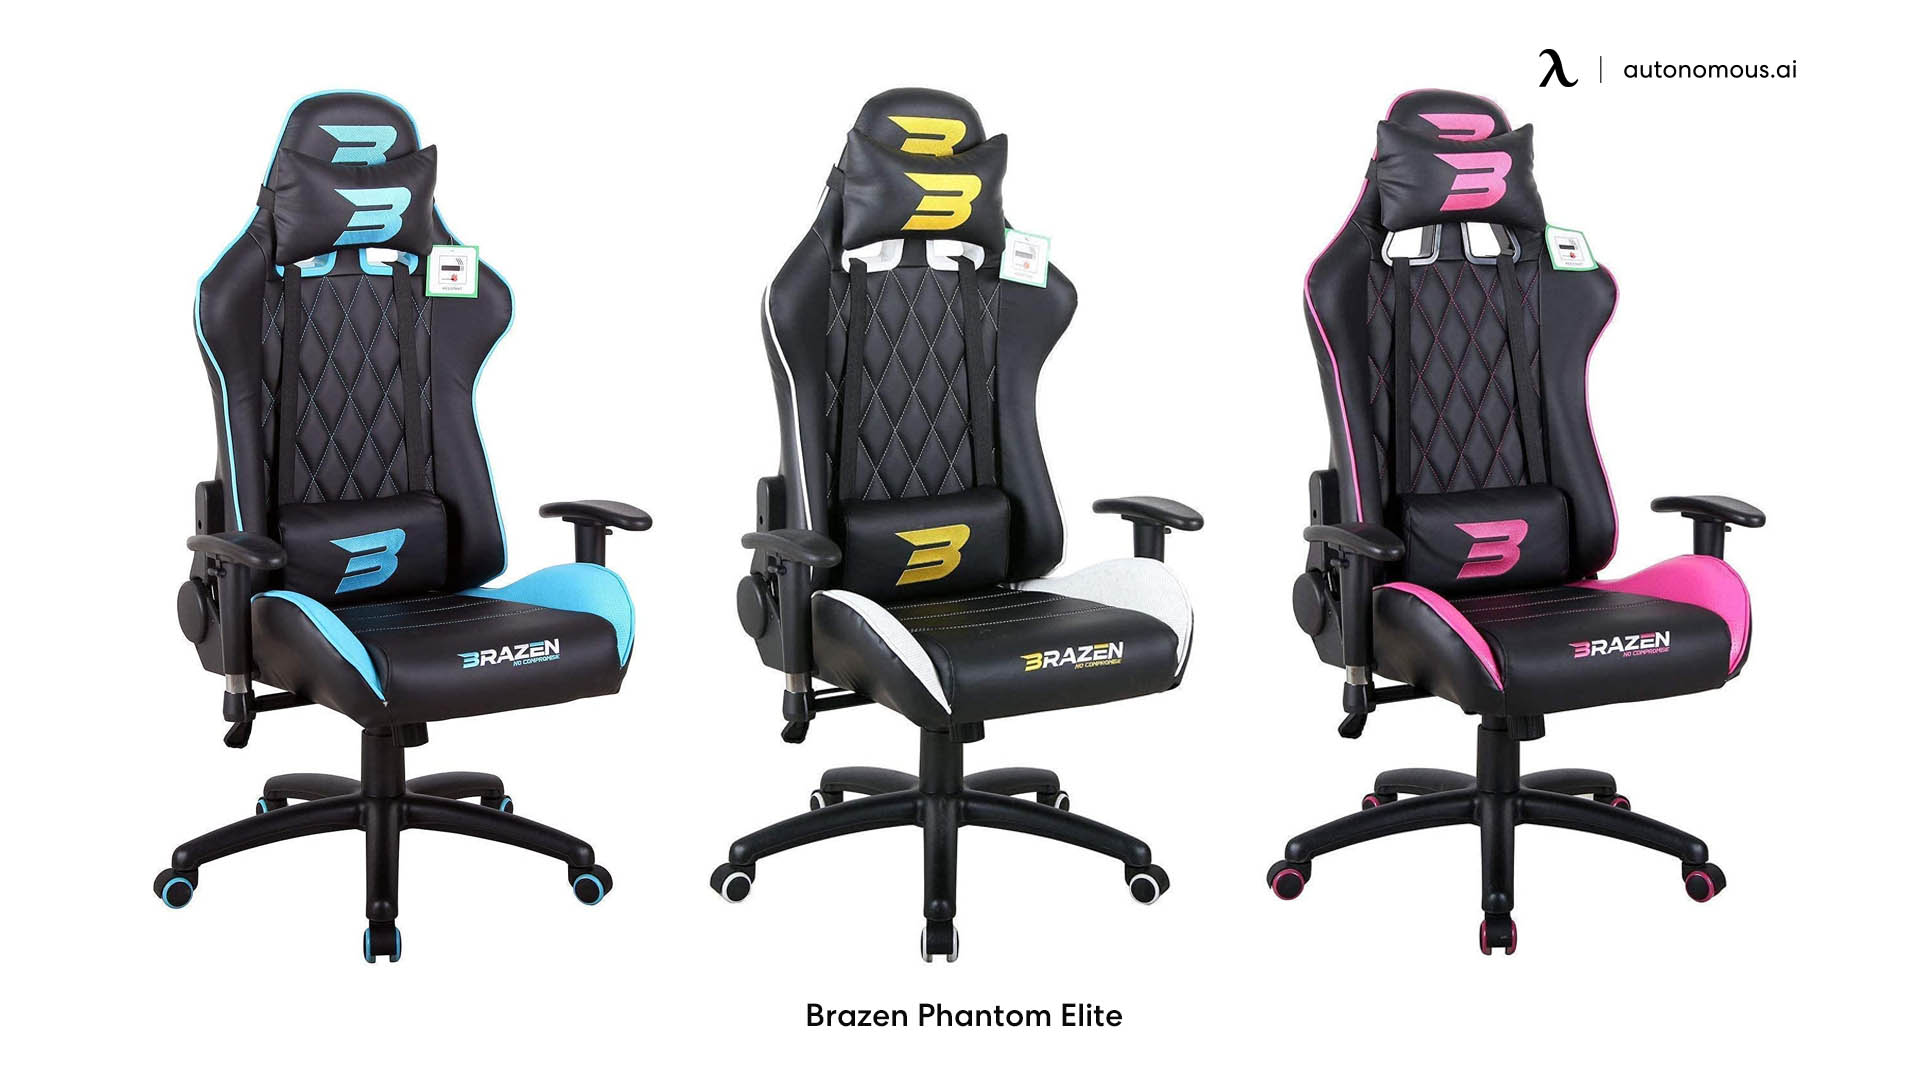 Brazen Phantom Elite best budget gaming chair